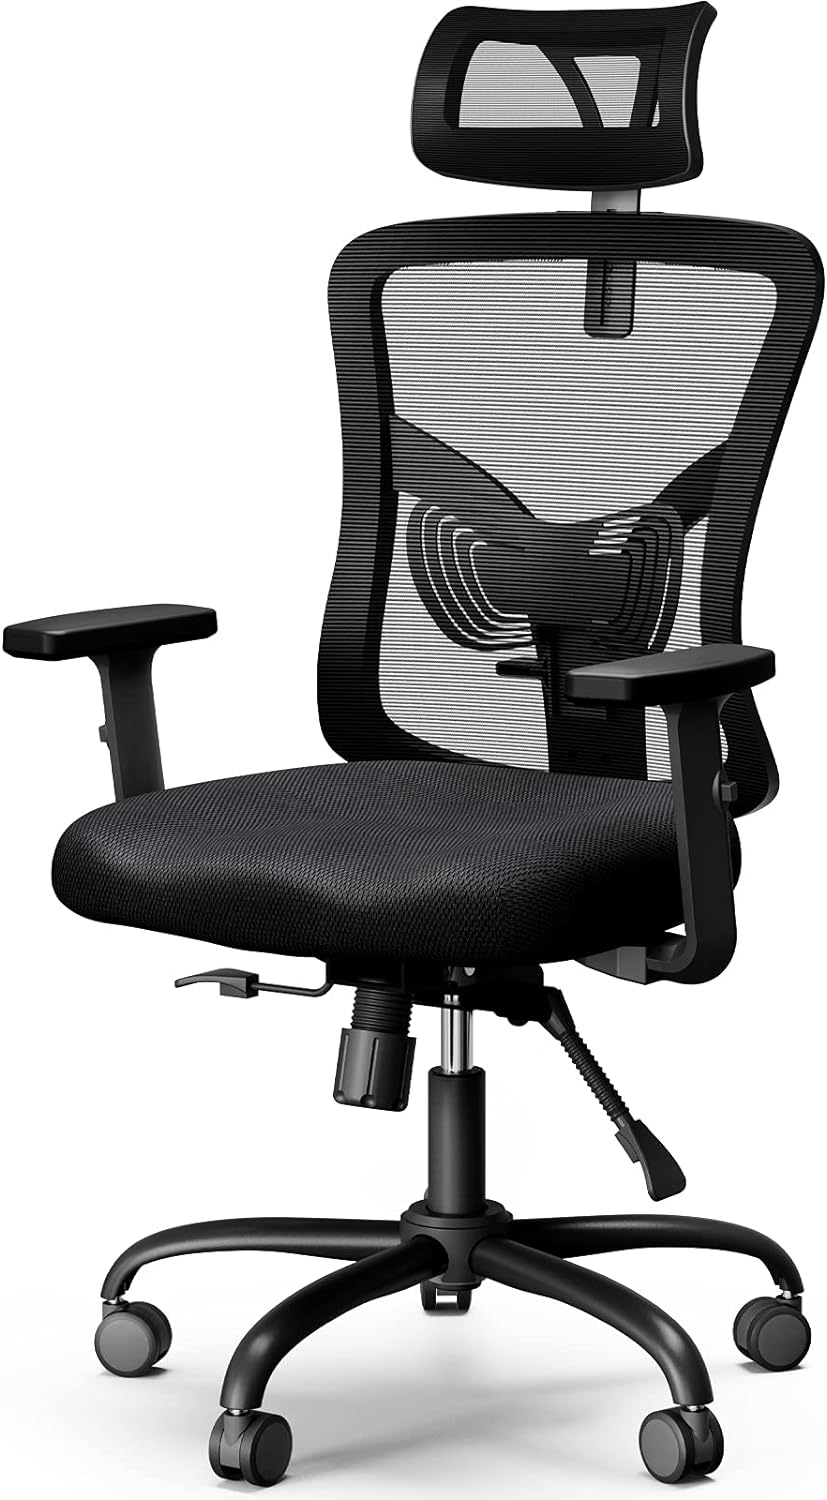 Office Computer Swivel Lifting Chair Adjustable Headrest Neck